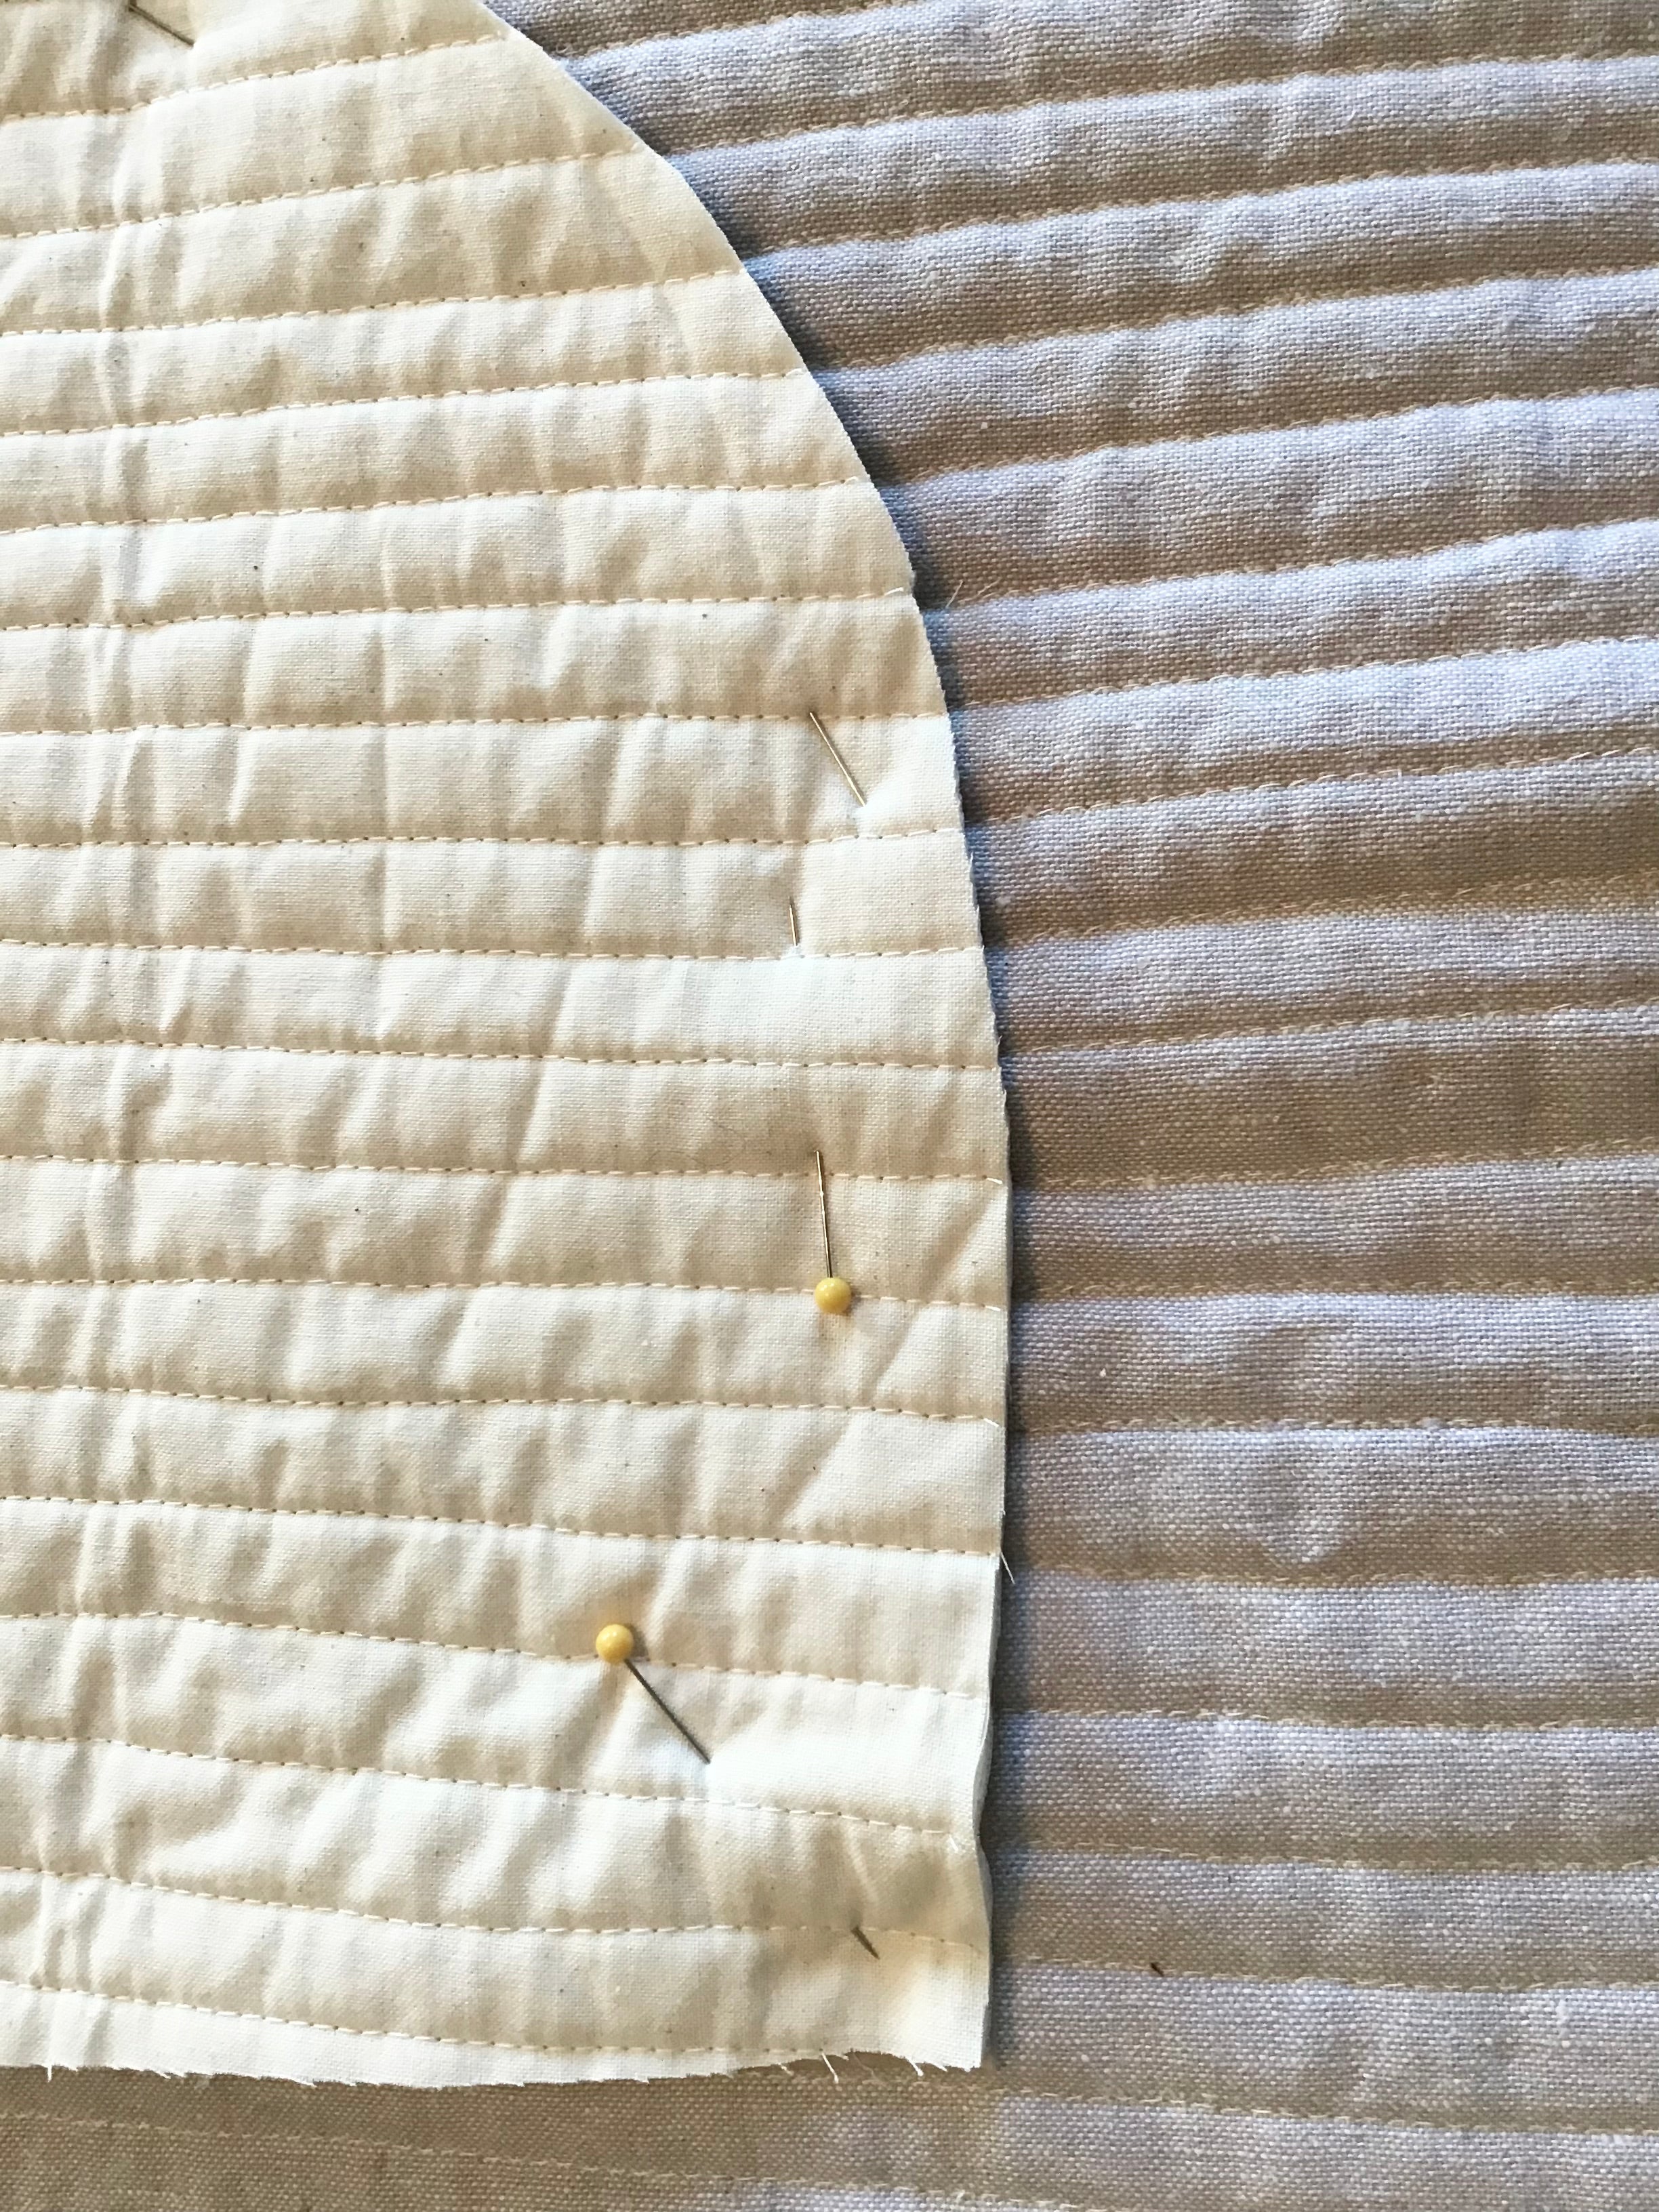 Quilt Coat Tutorial – Sewn Modern Quilt Patterns by Amy Schelle